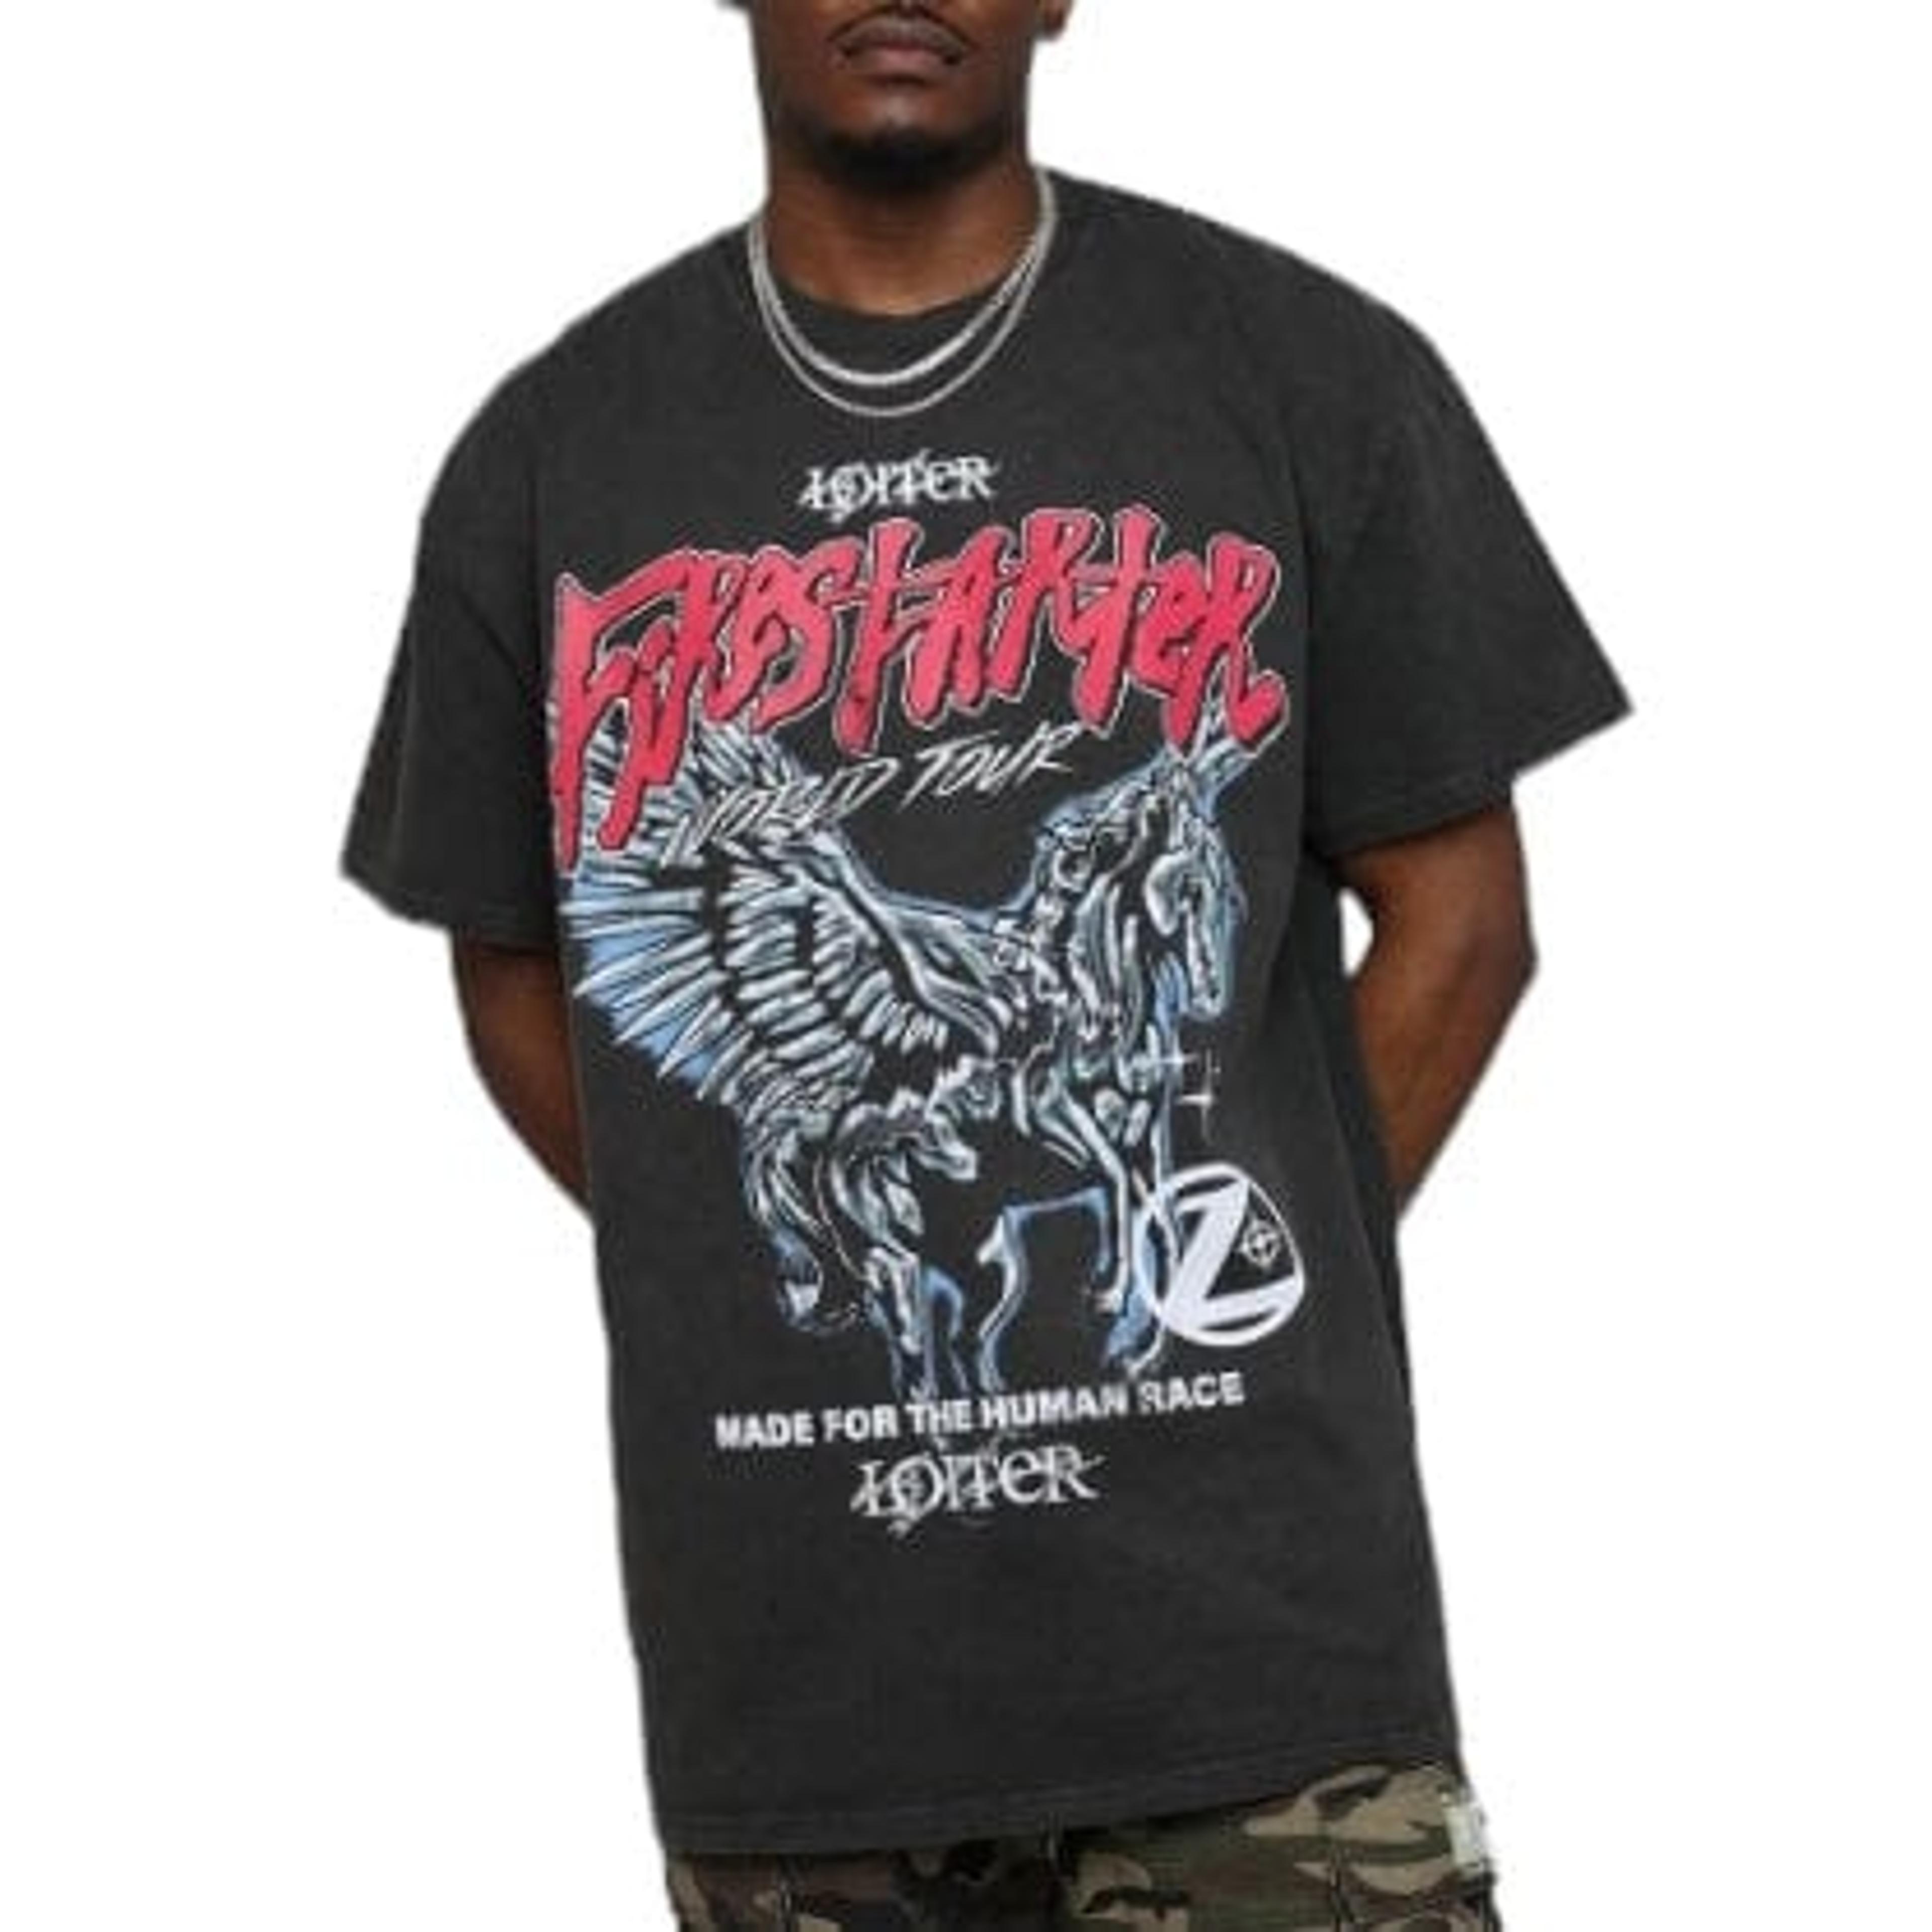 Loiter Firestarter Tour Ultra Premium Vintage T Shirt (Black Was